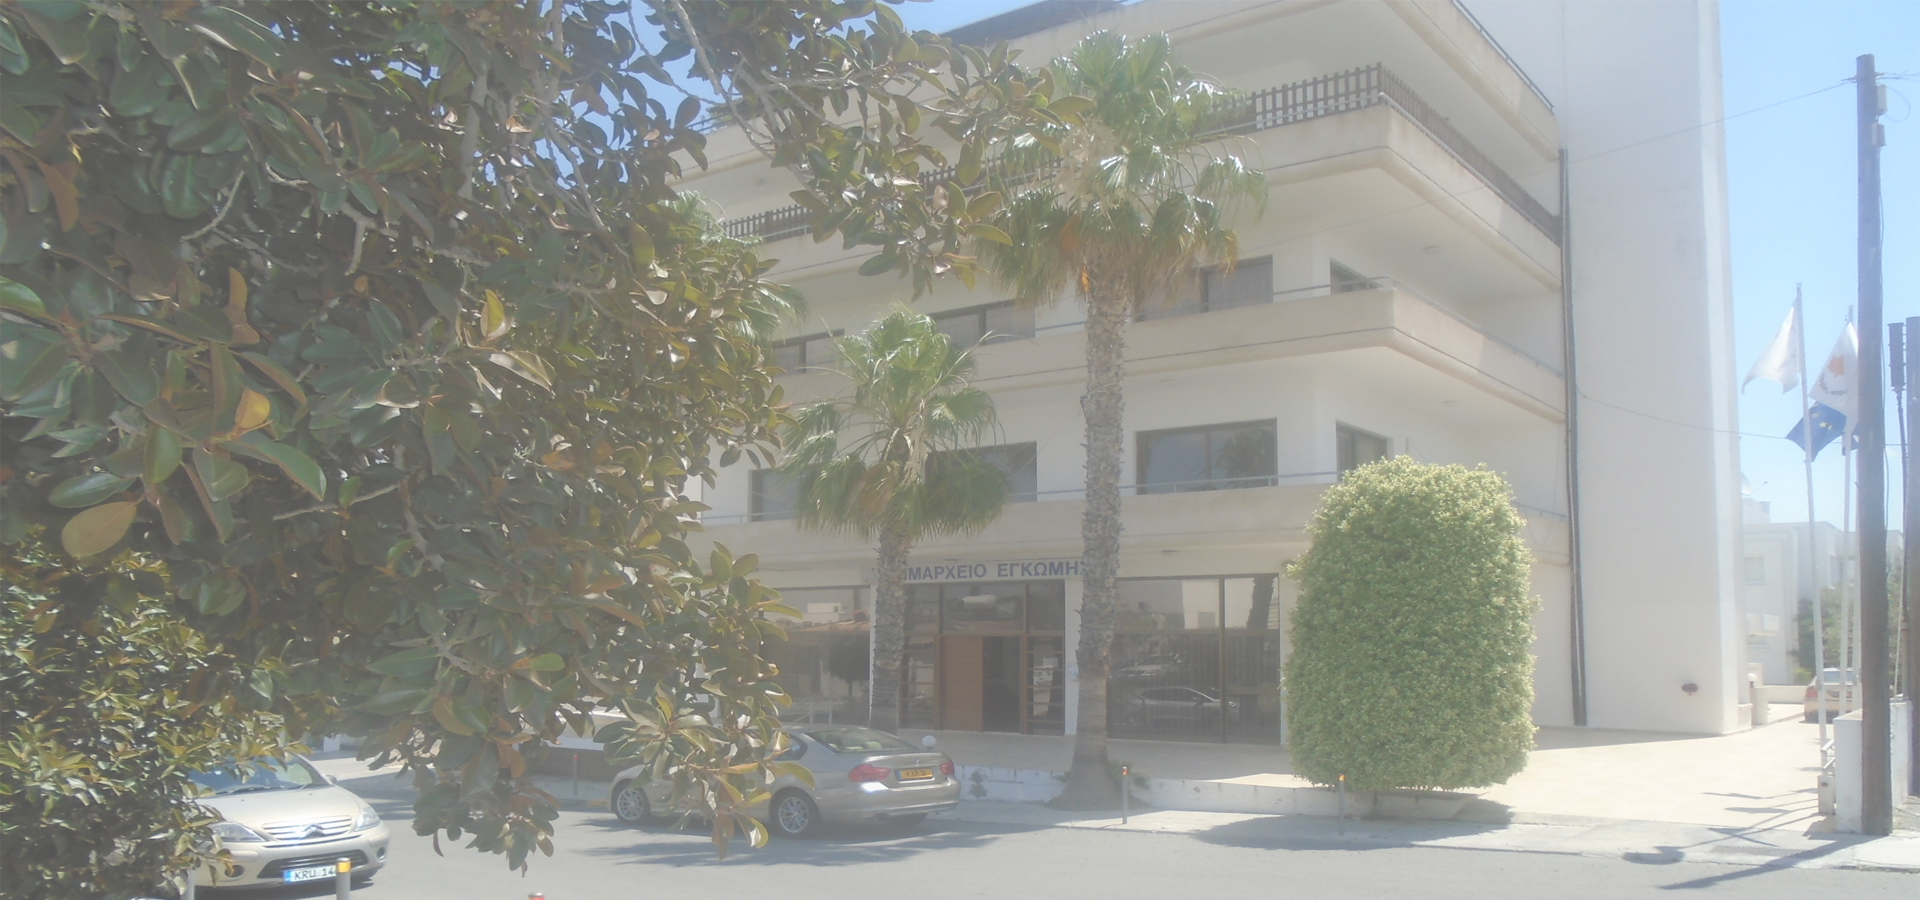 <b>Egkomi, Gazimağusa District, Cyprus</b>